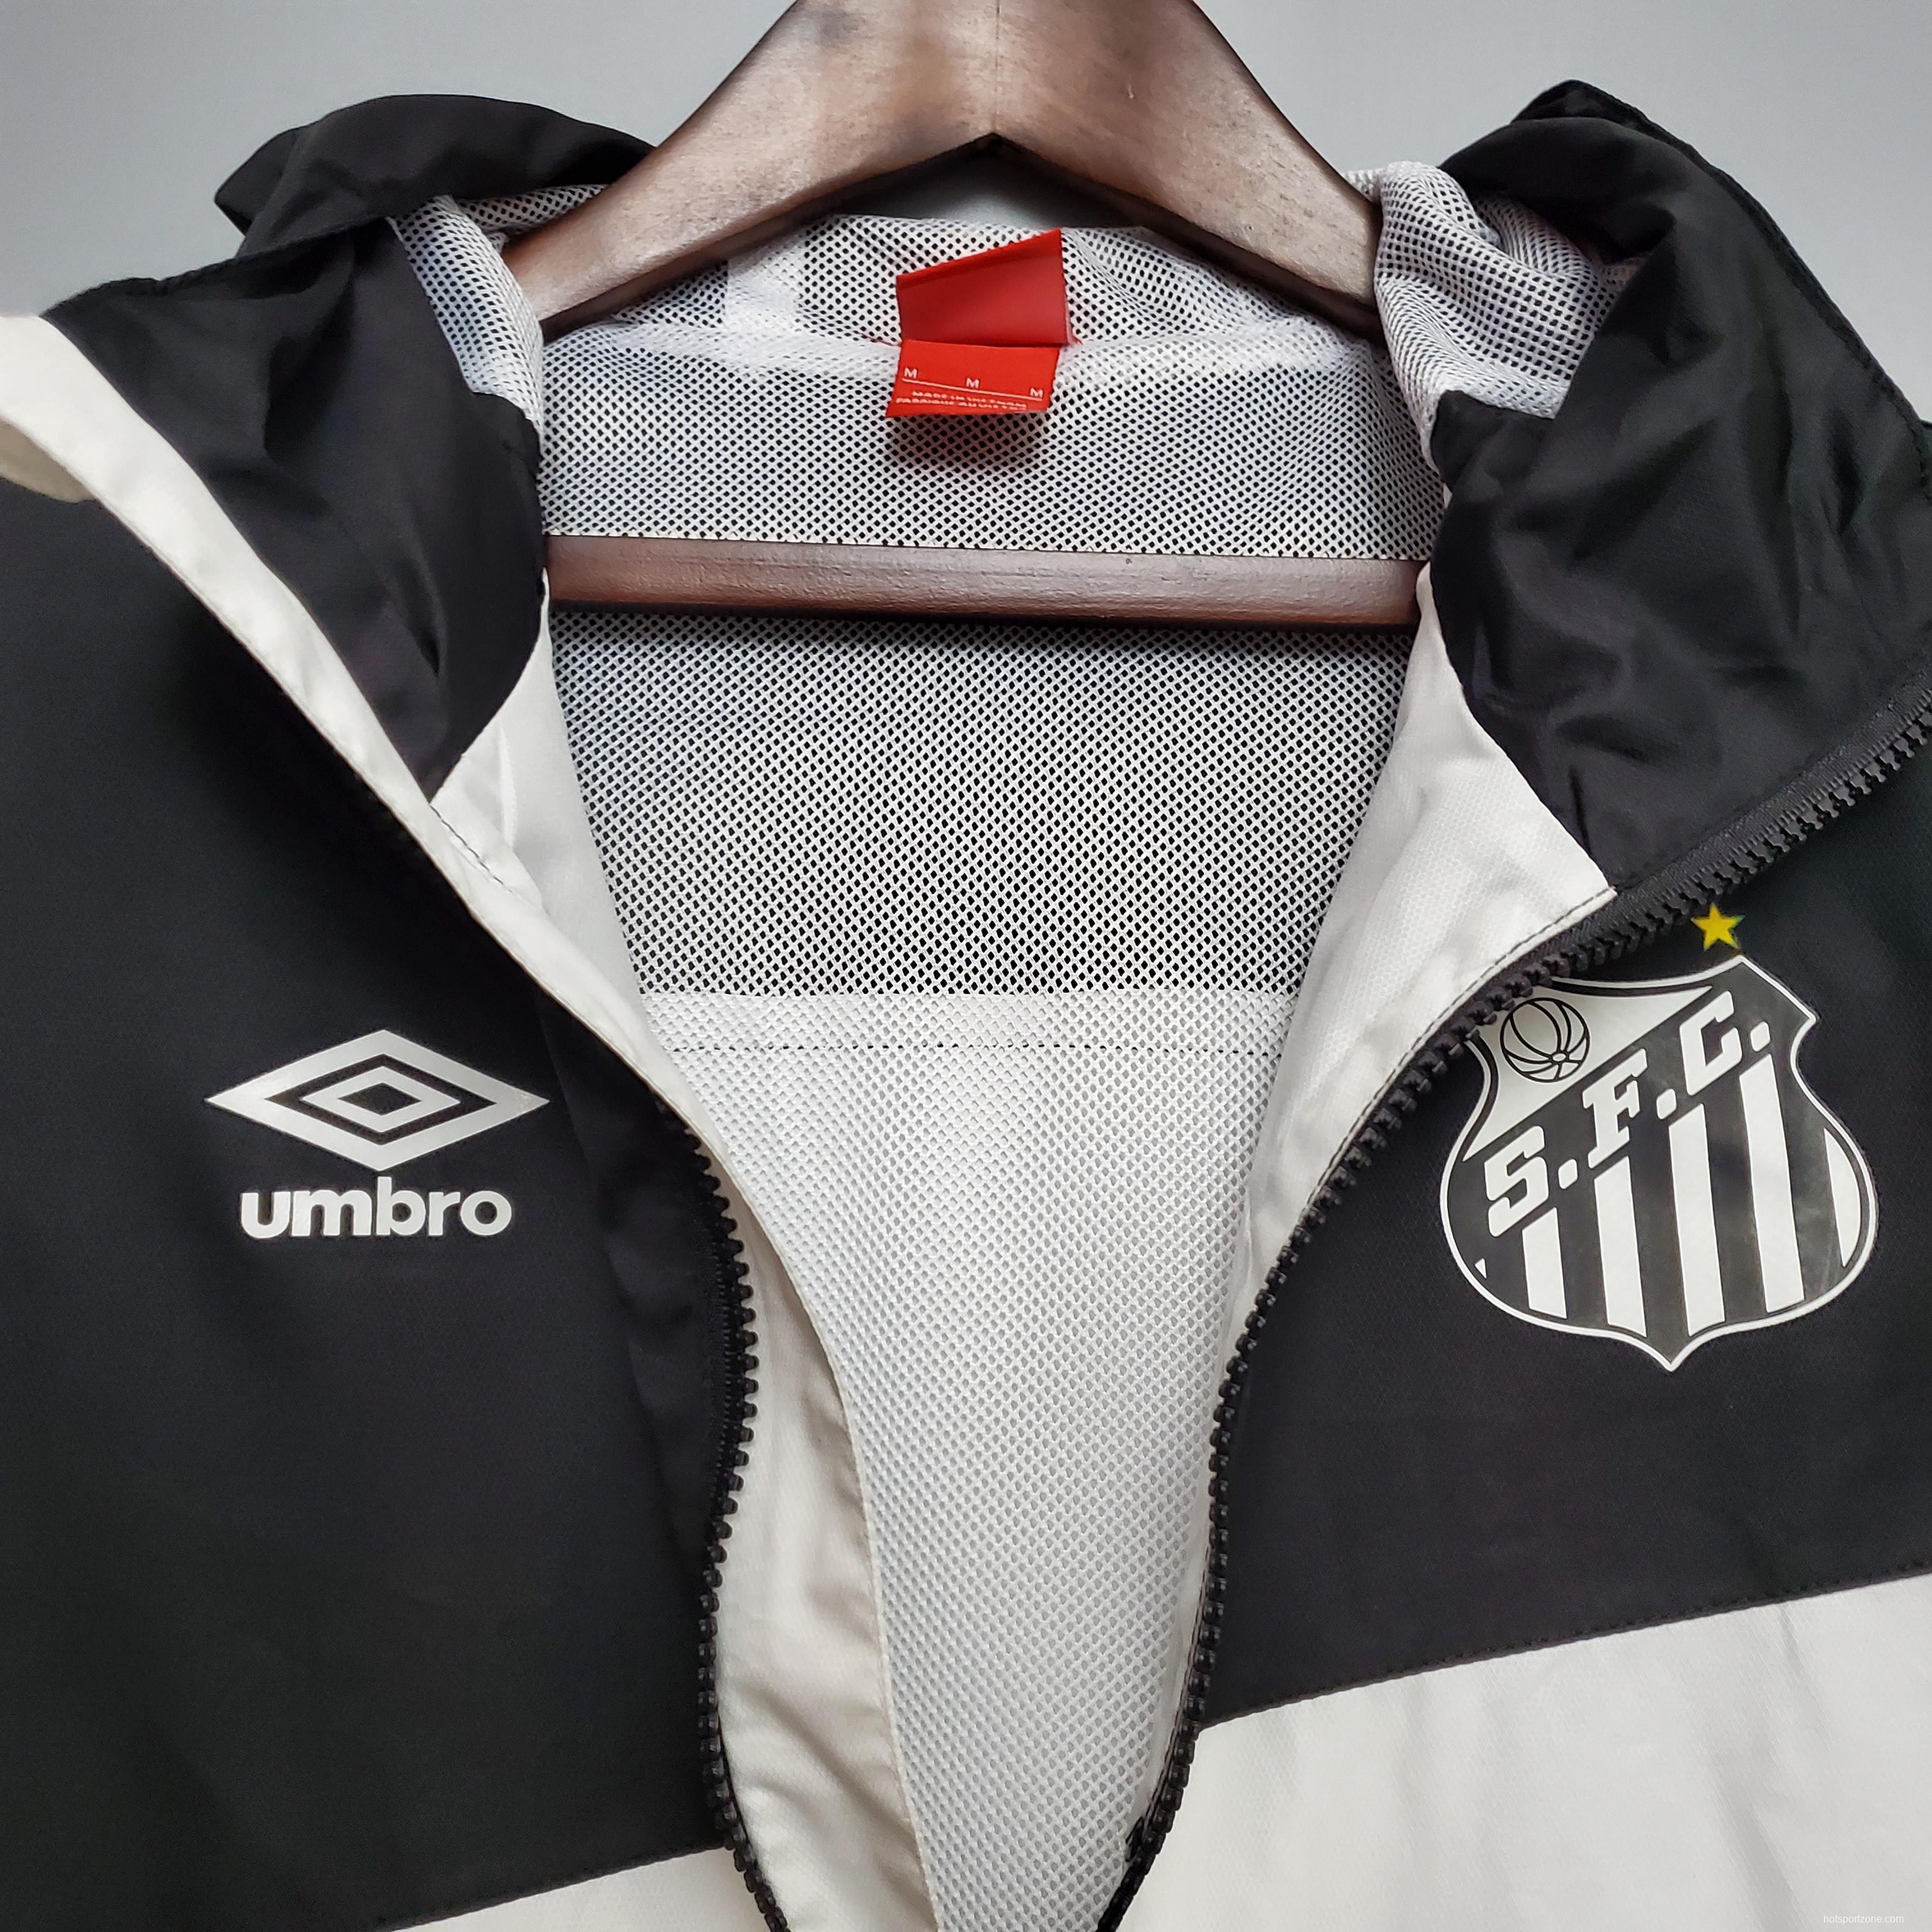 Windbreaker Santos Black and White Soccer Jersey